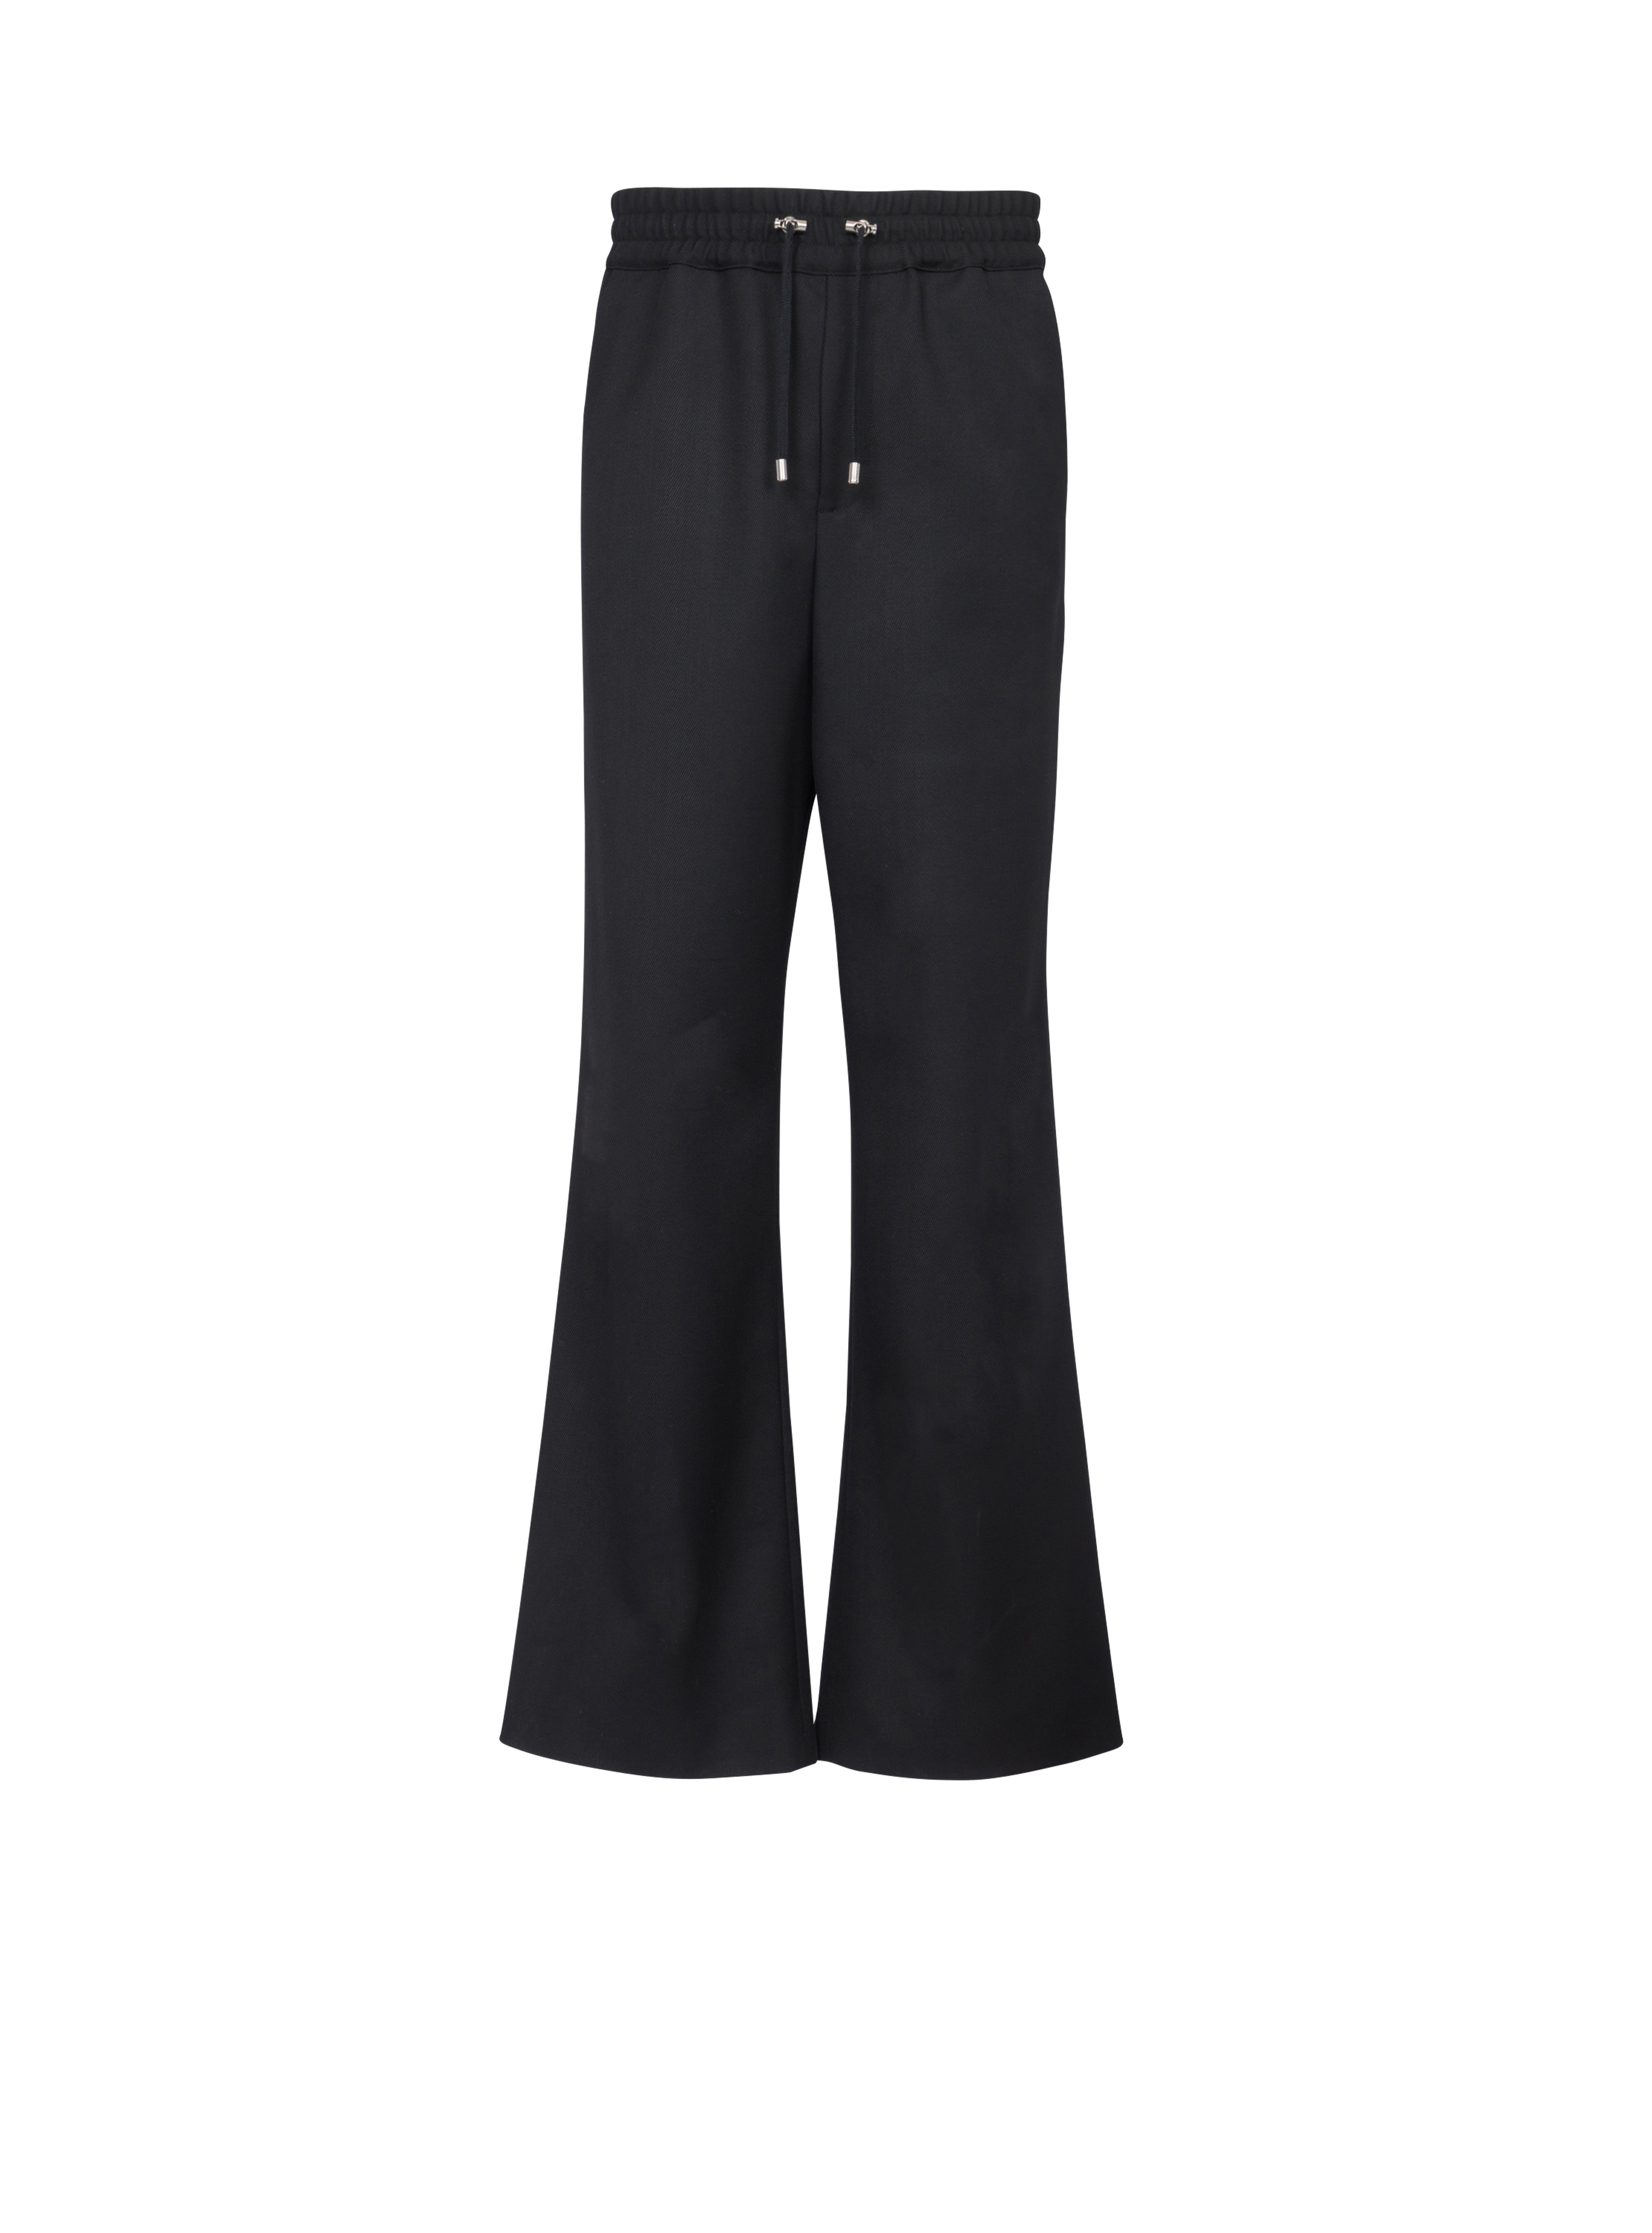 Wool pyjama pants, black, hi-res